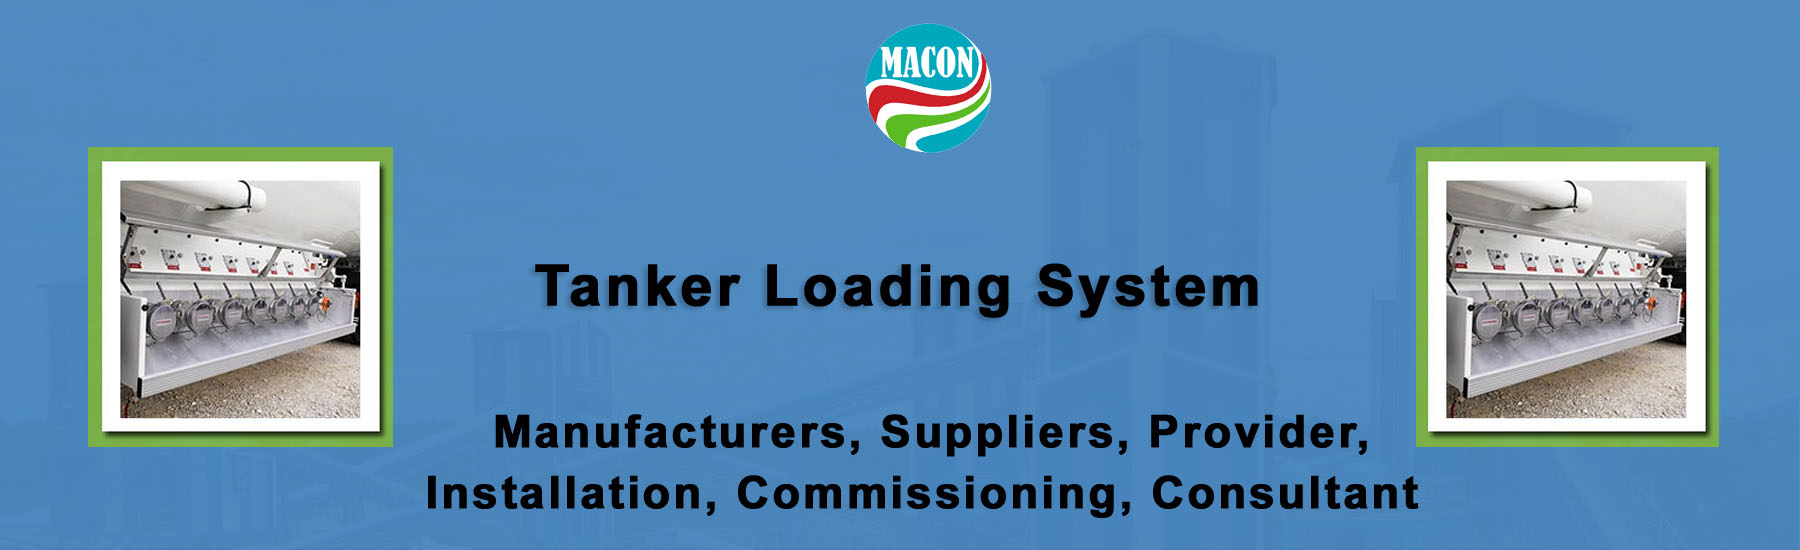 Tanker Loading System